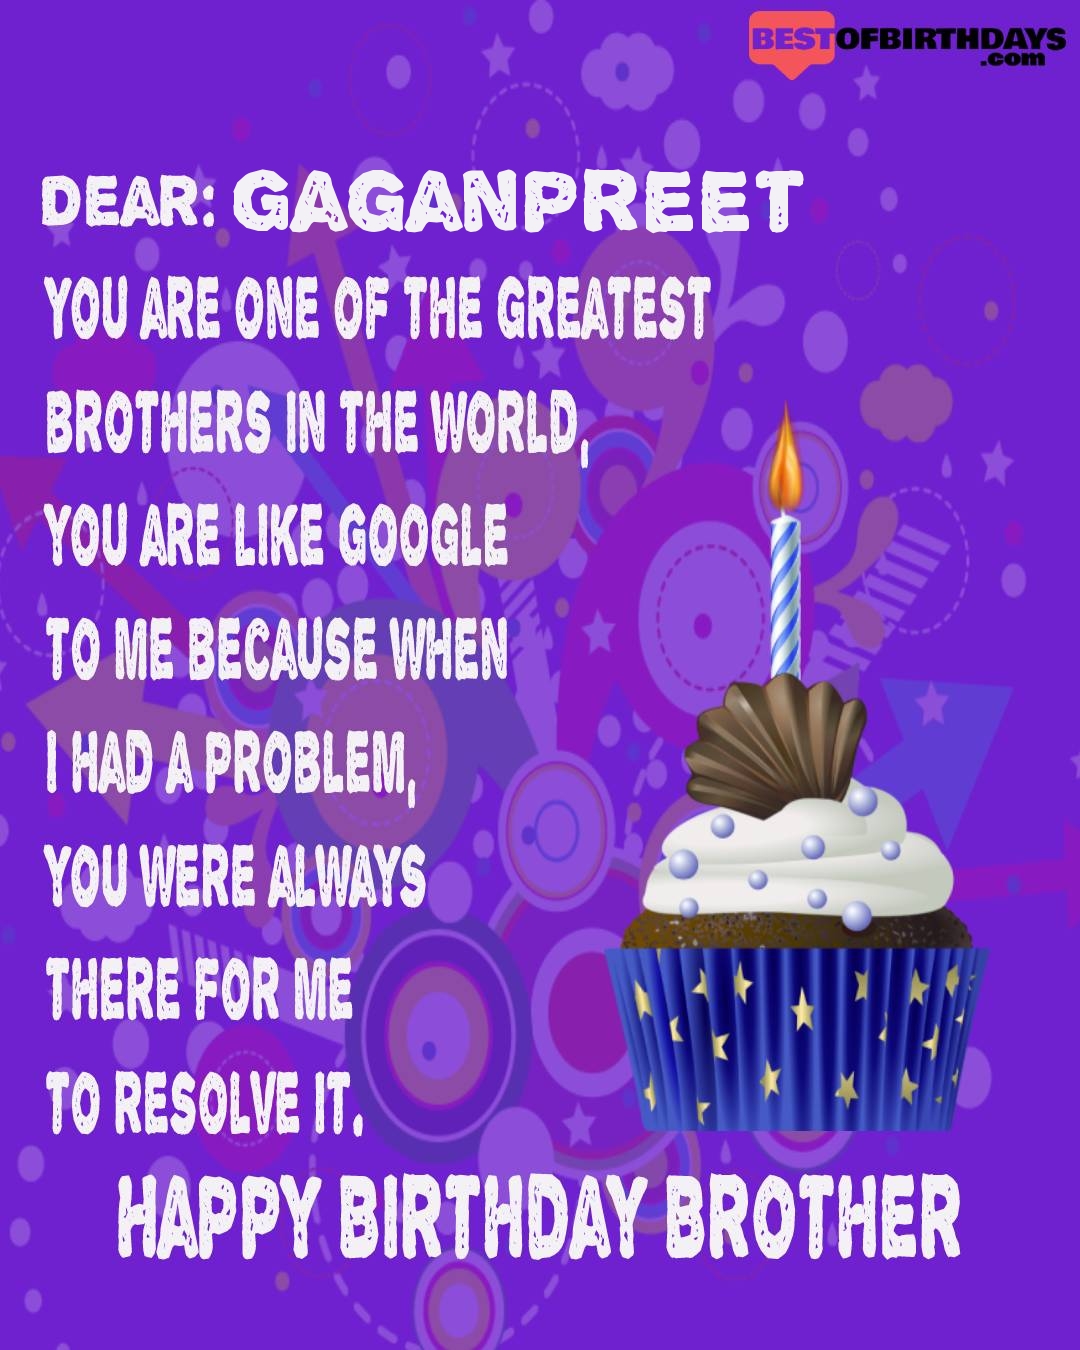 Happy birthday gaganpreet bhai brother bro